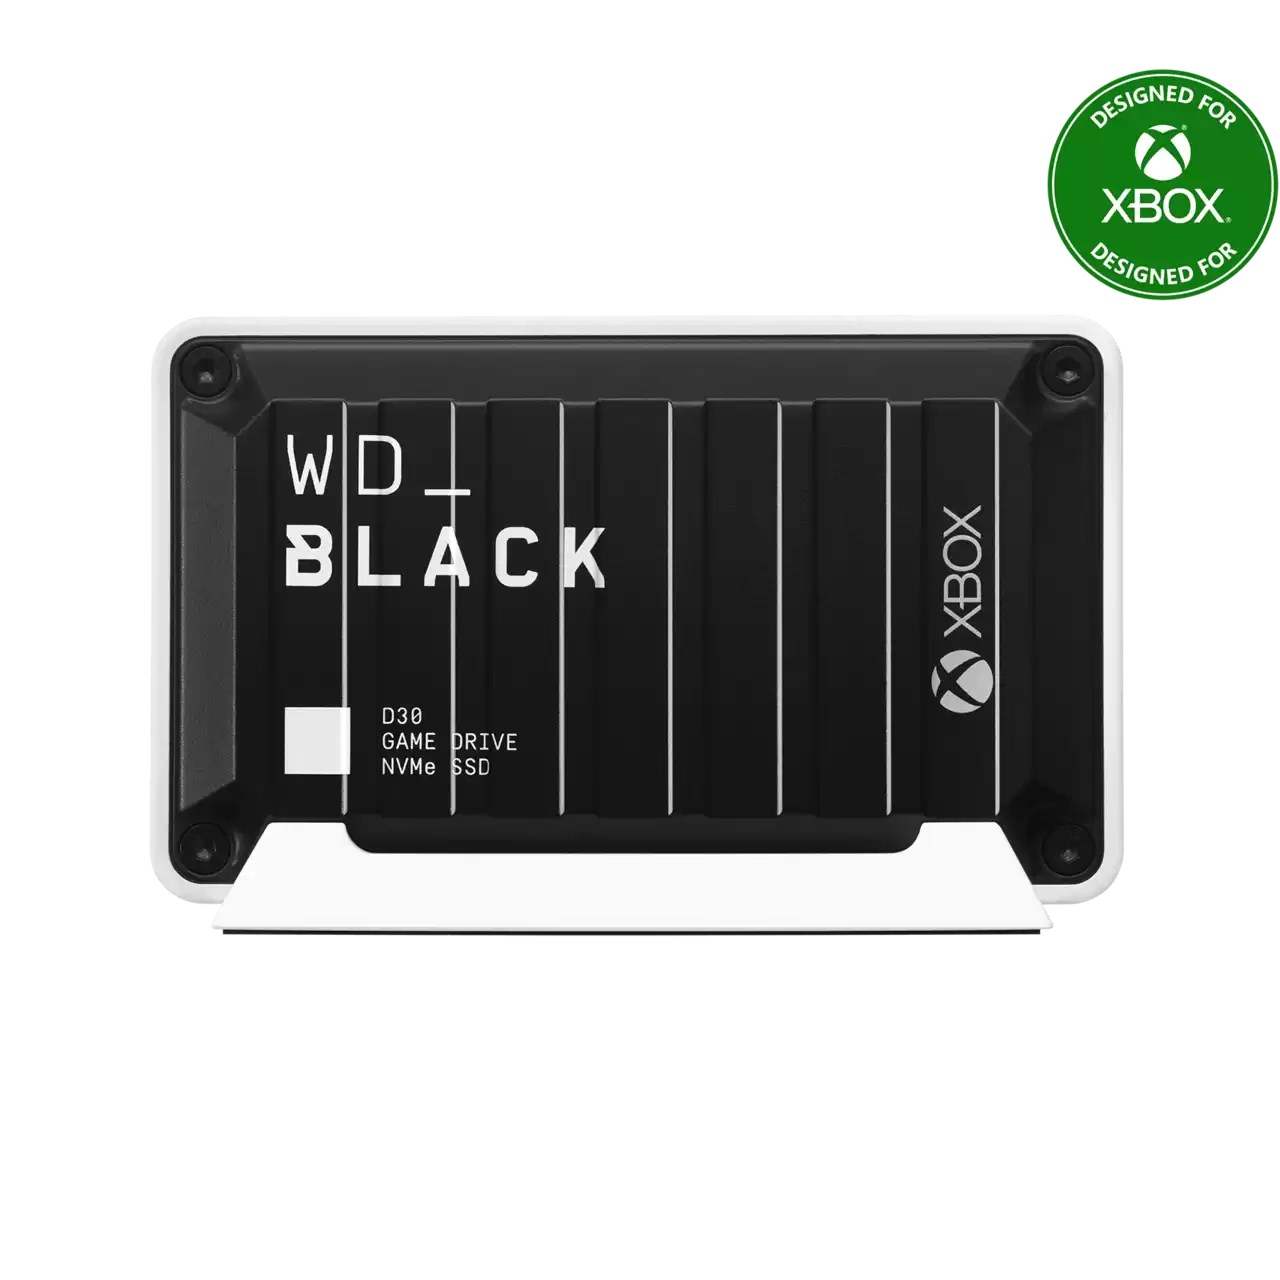 SanDisk externí SSD 2TB WD BLACK D30 Game Drive pro Xbox0 